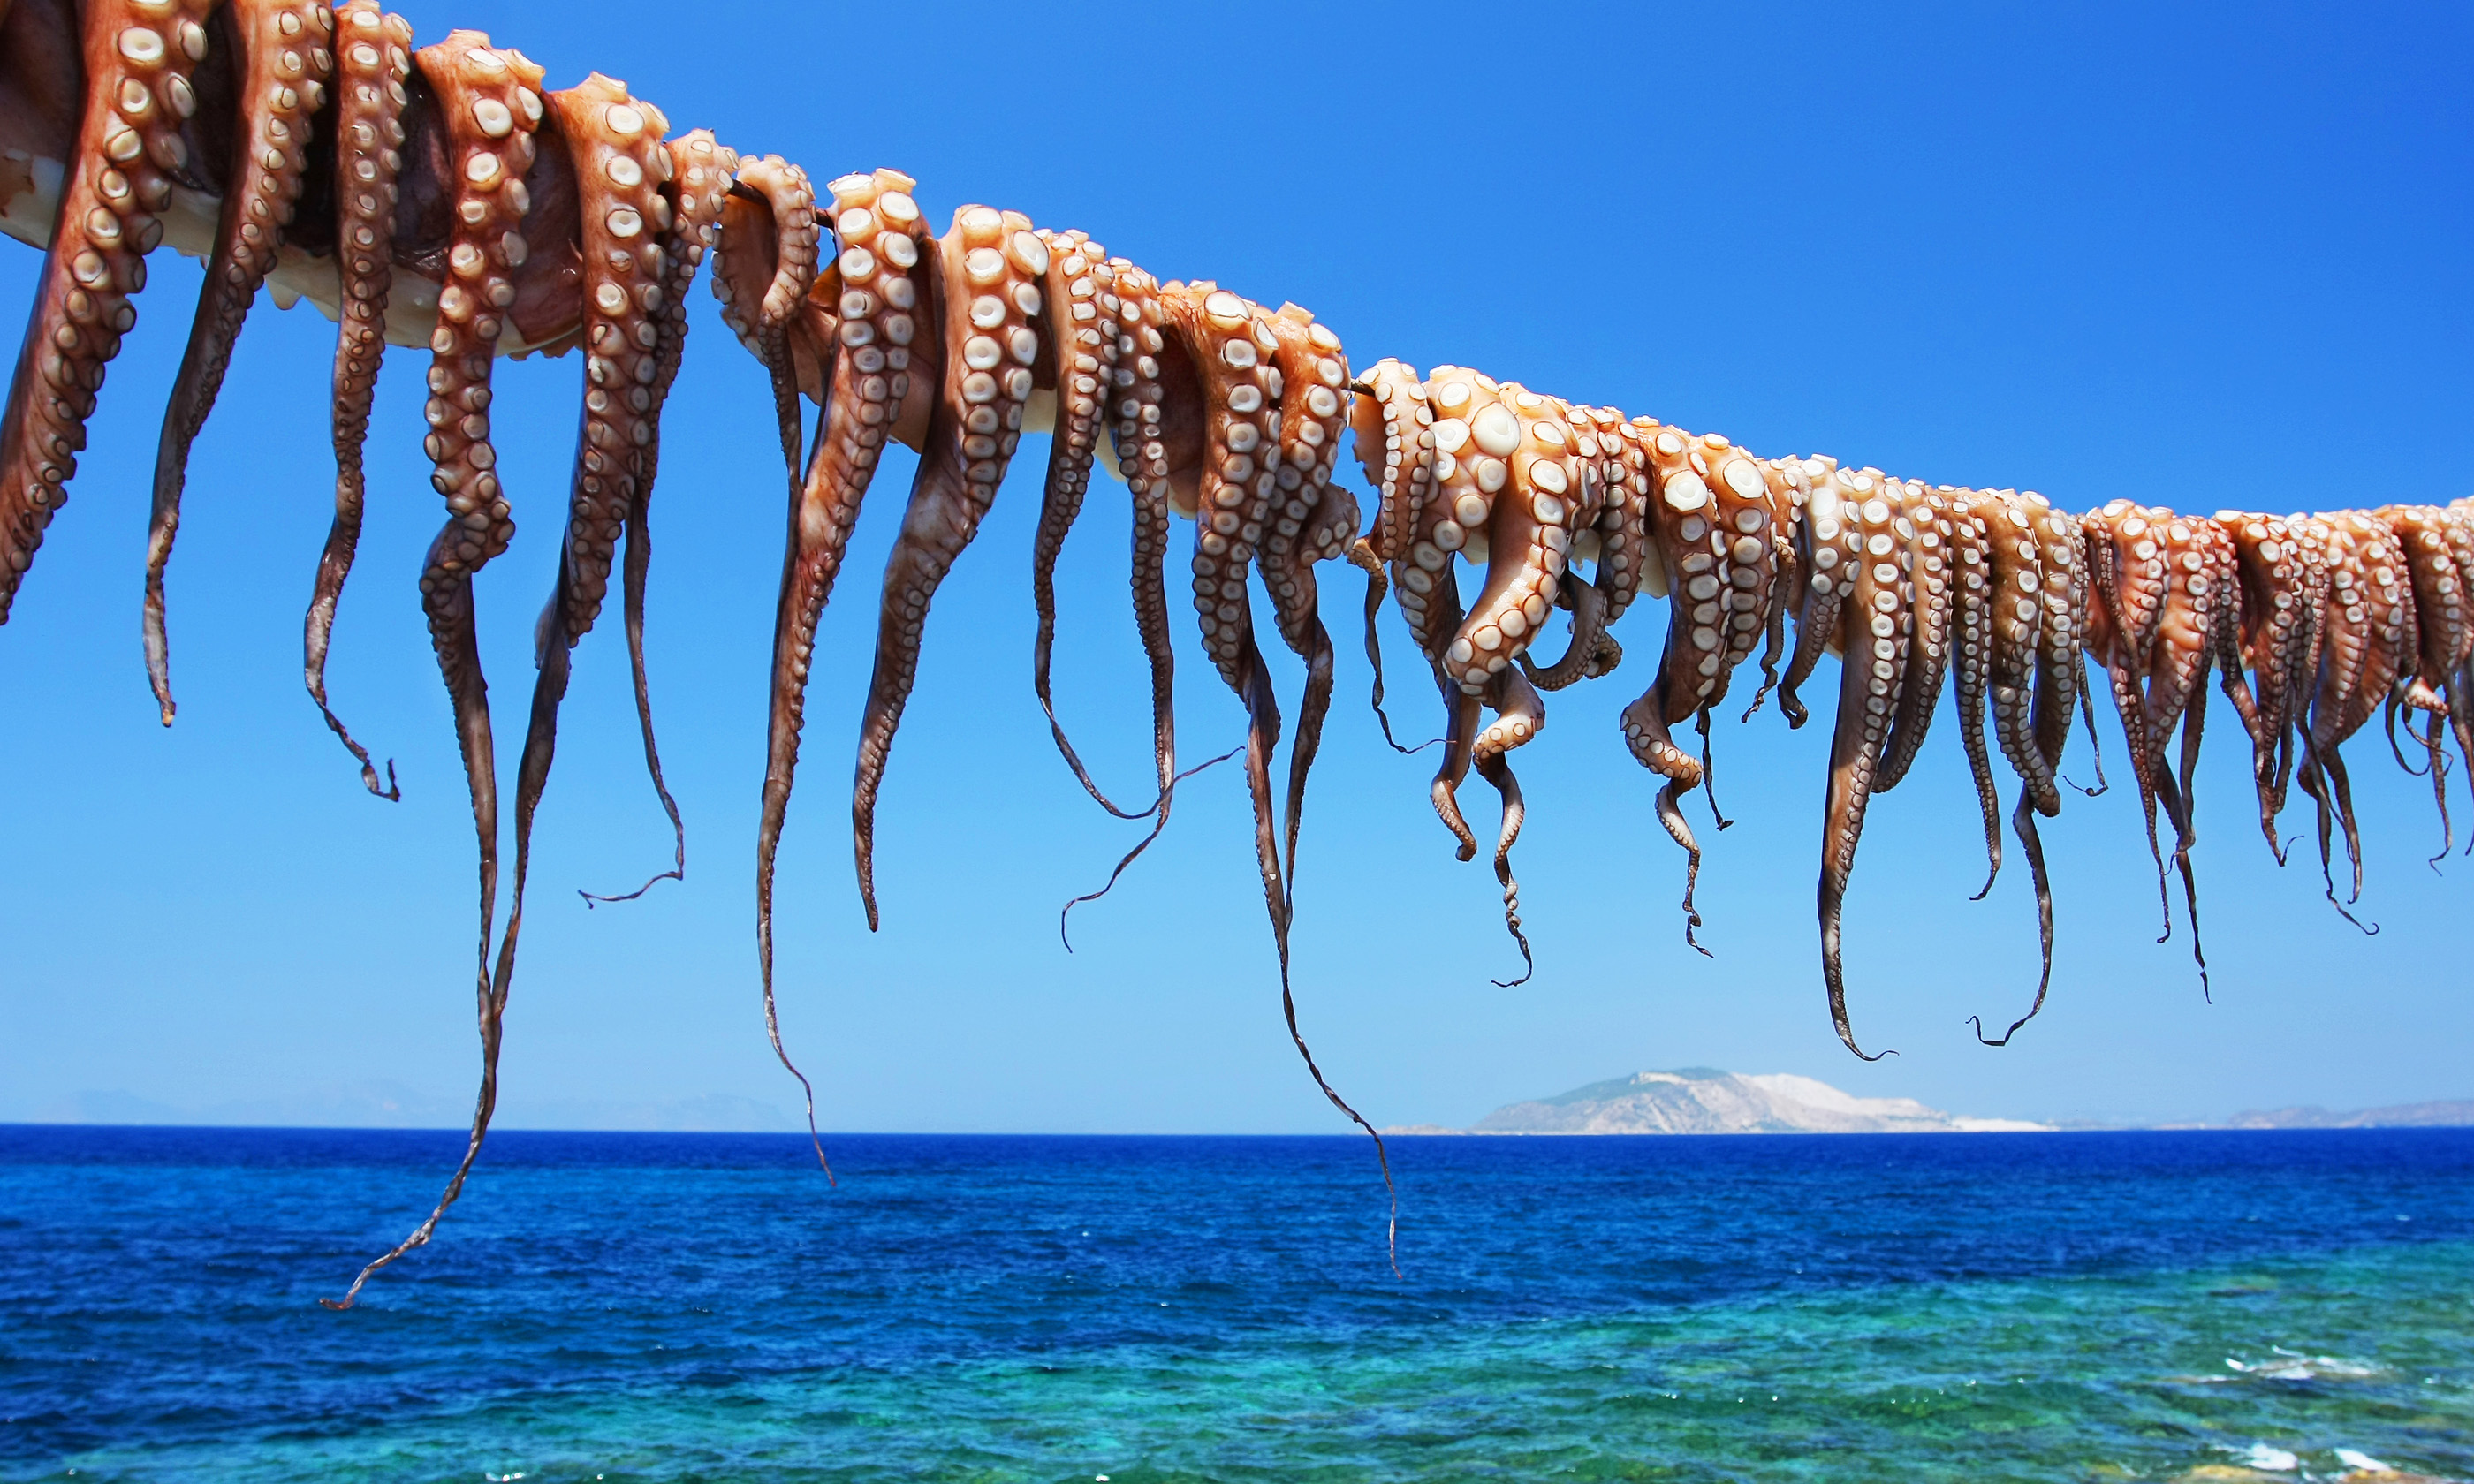 Octopus drying on Nisyros (Shutterstock.com)